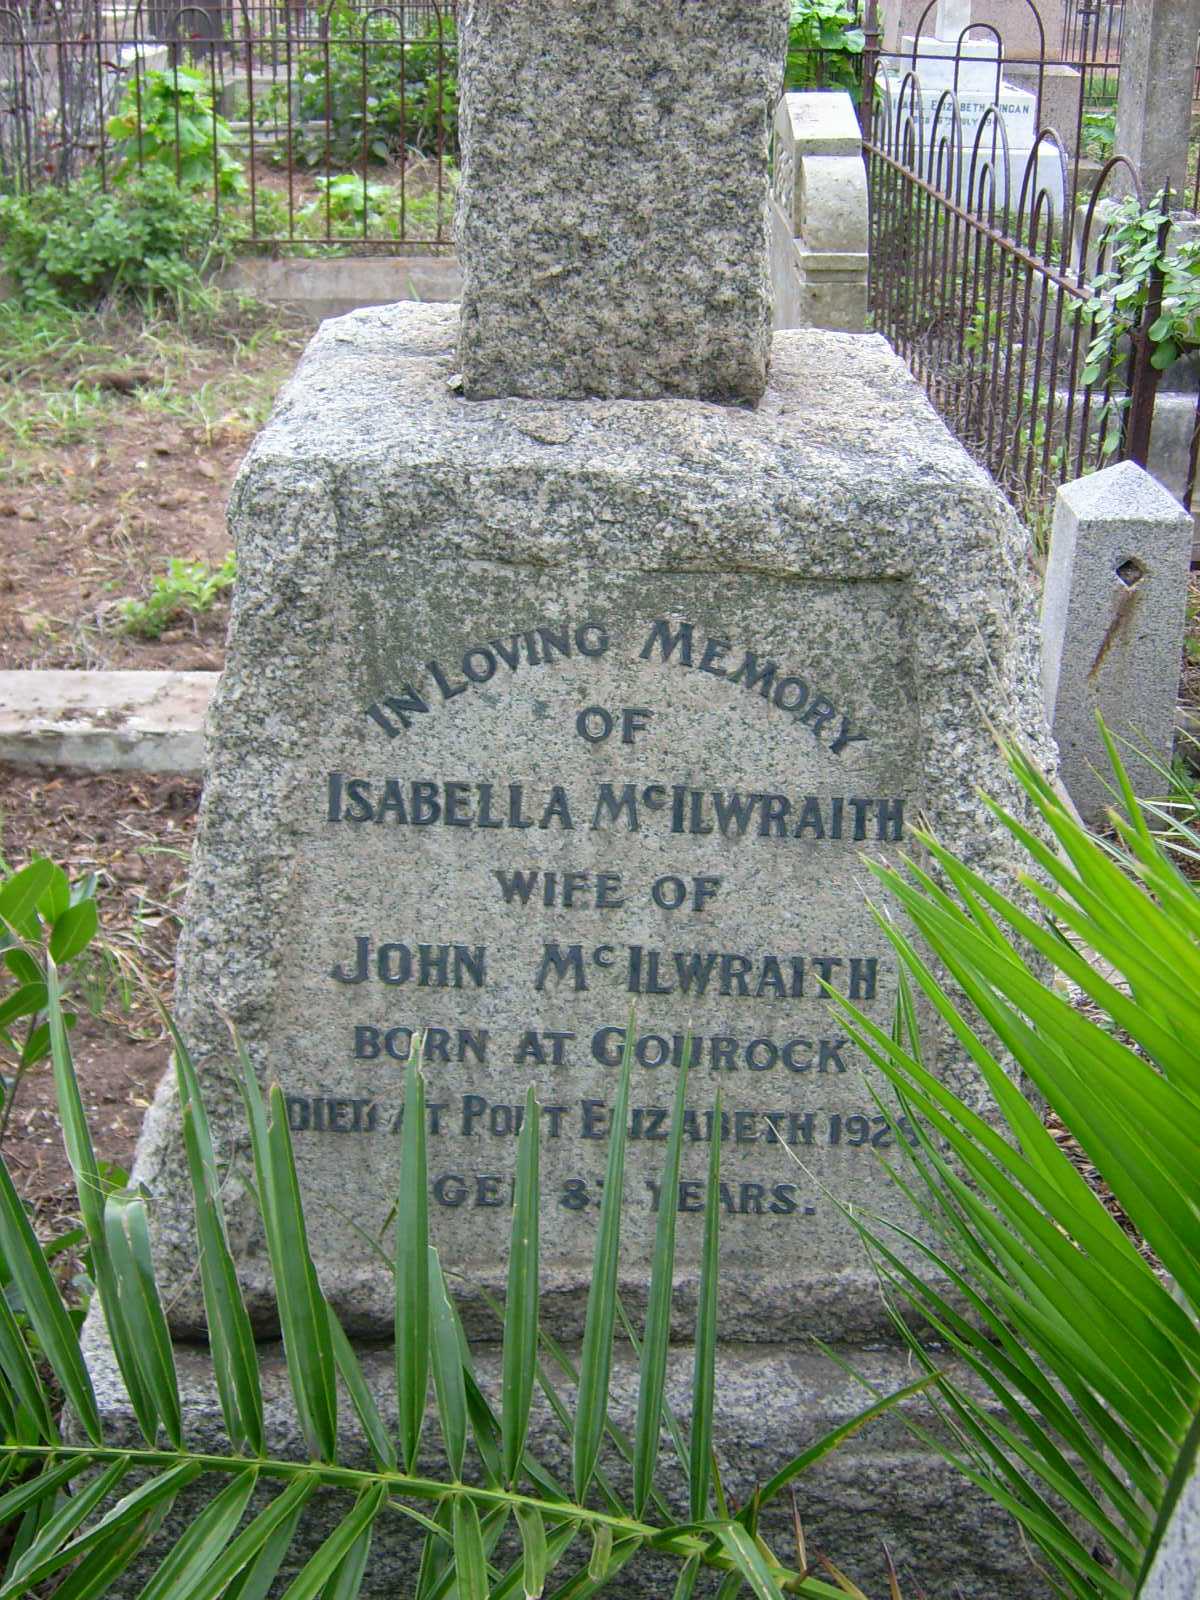 McILWRAITH Isabella -192?